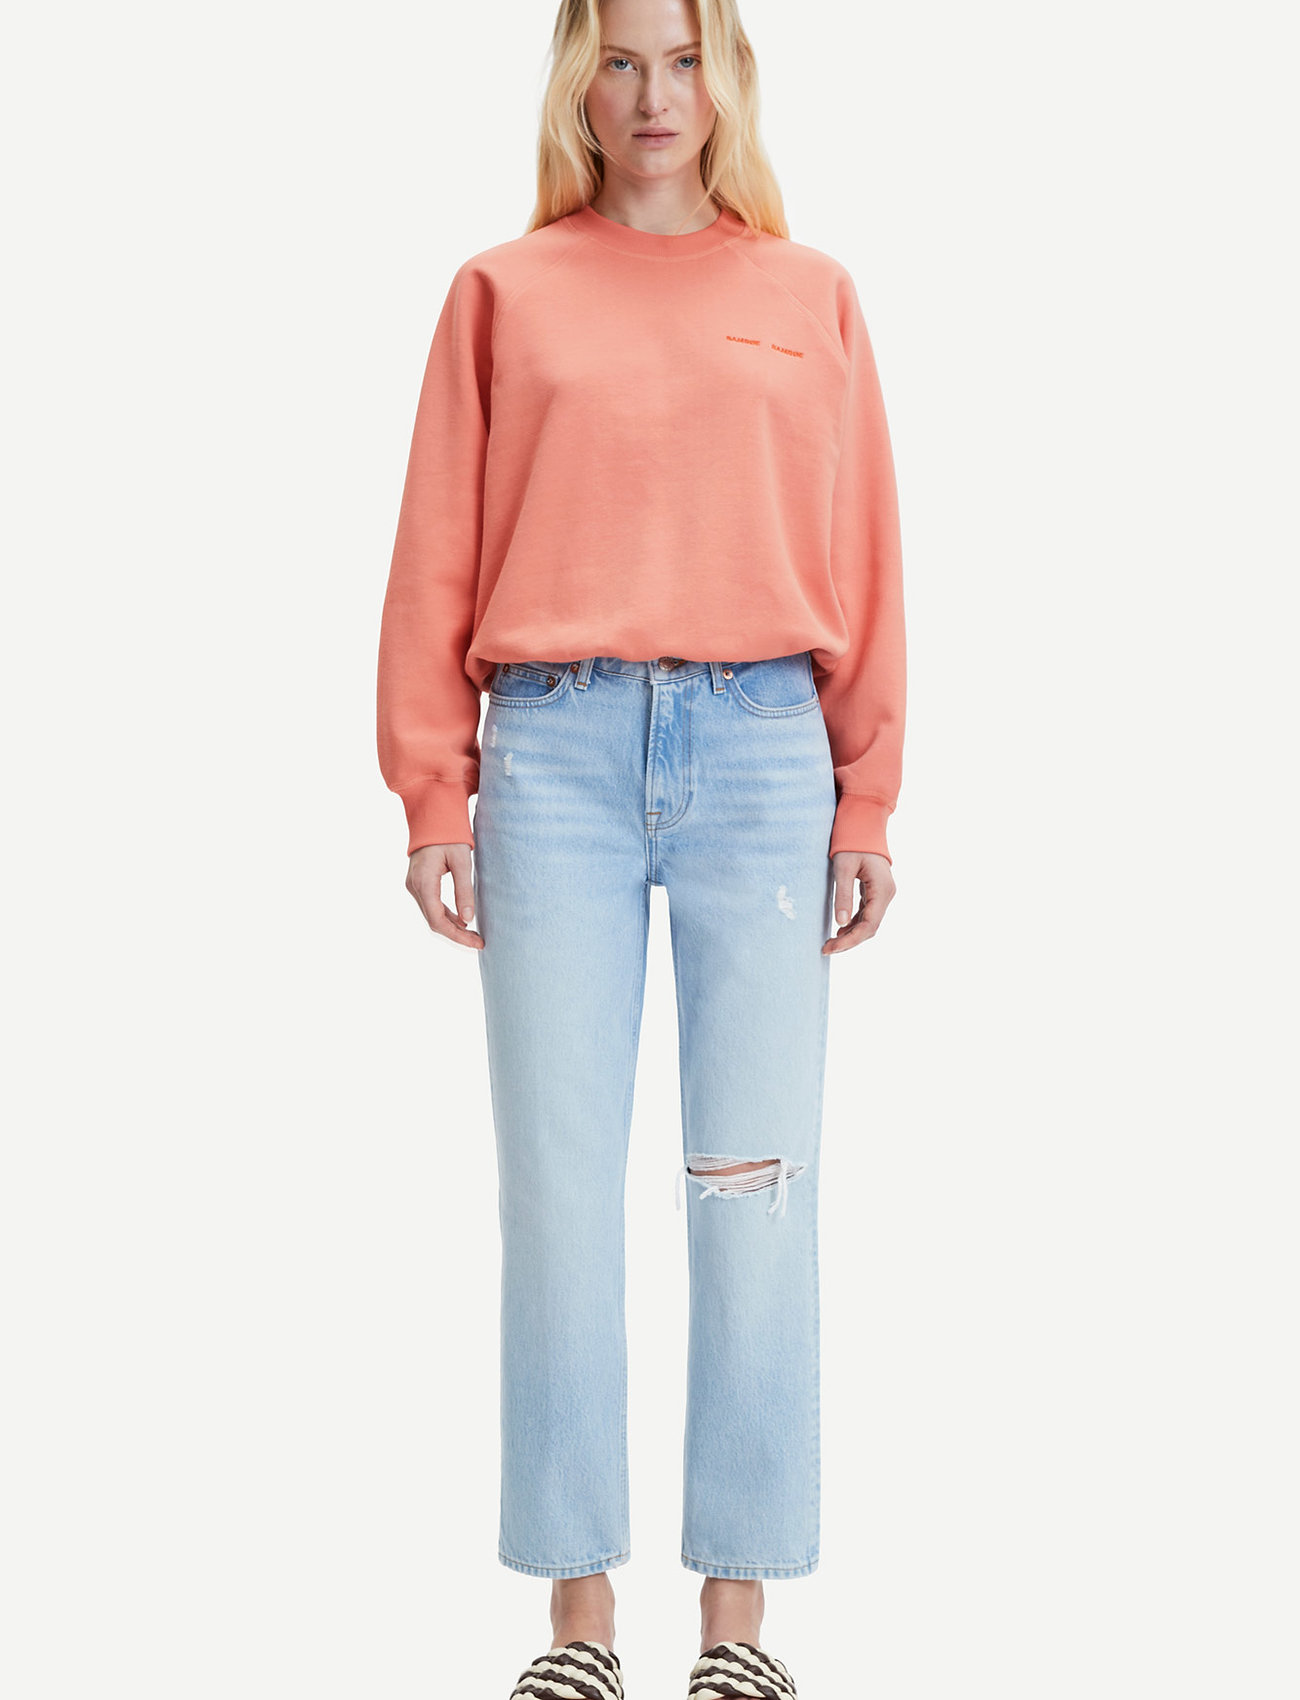 Samsøe Marianne Jeans 14376 - Straight jeans - Boozt.com